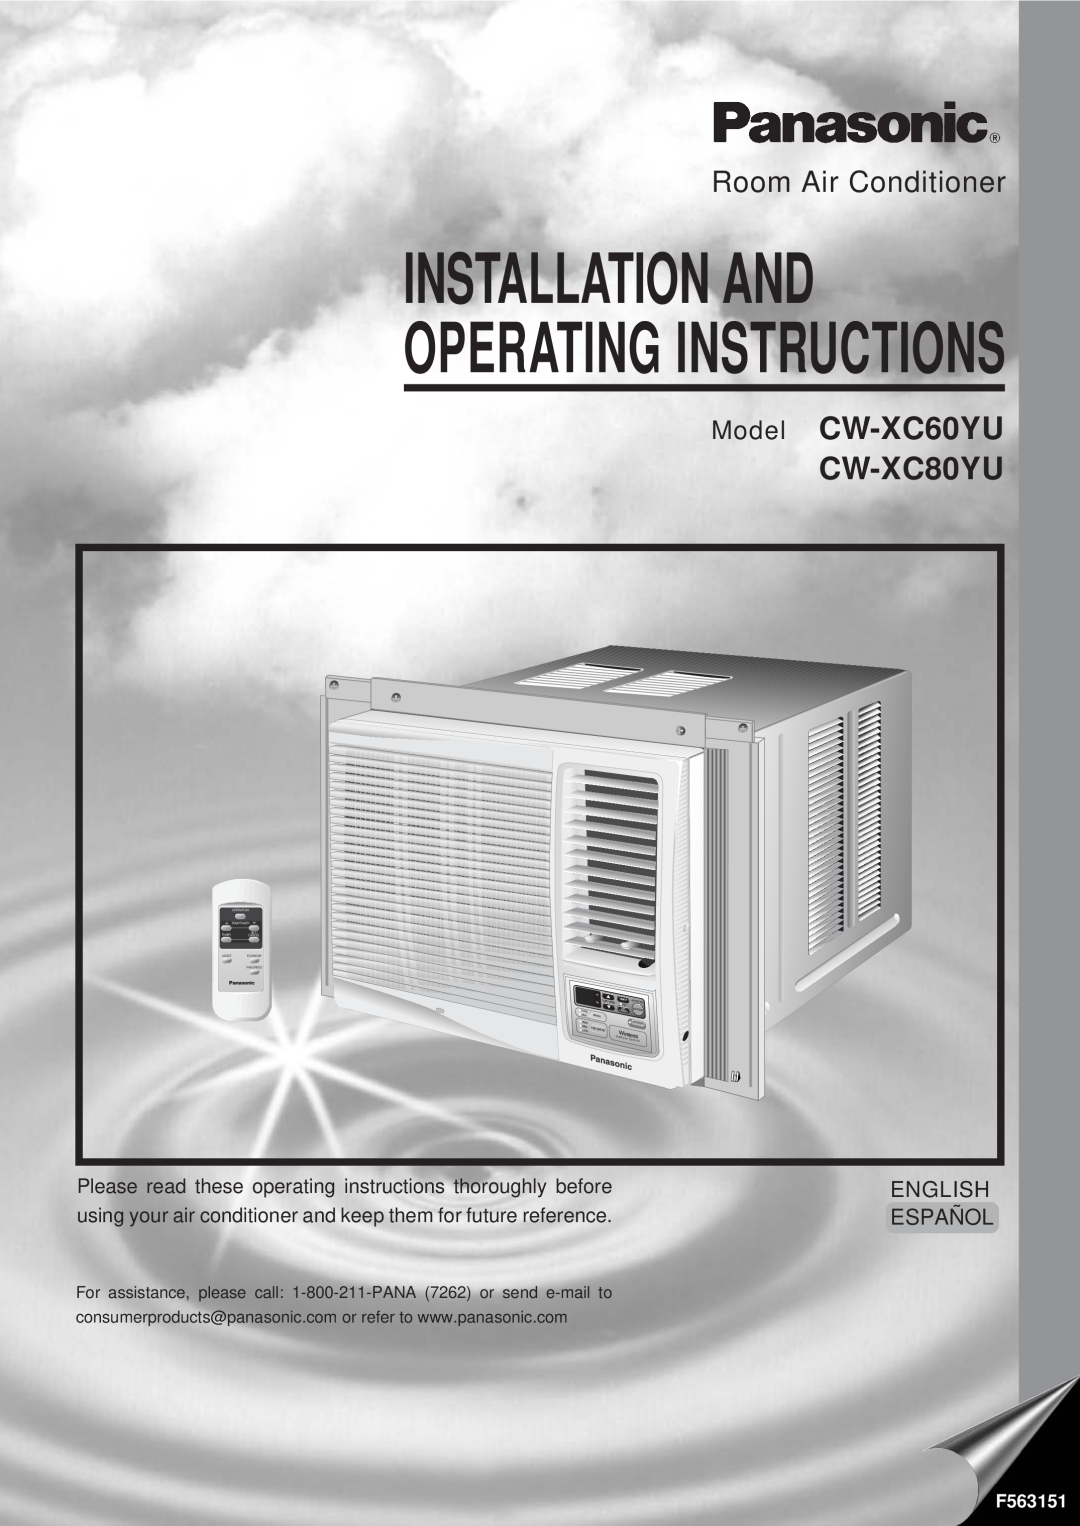 Panasonic CW-XC80YU manual Installation And, Operating Instructions, CW-XC60YU, Room Air Conditioner, Model, English 